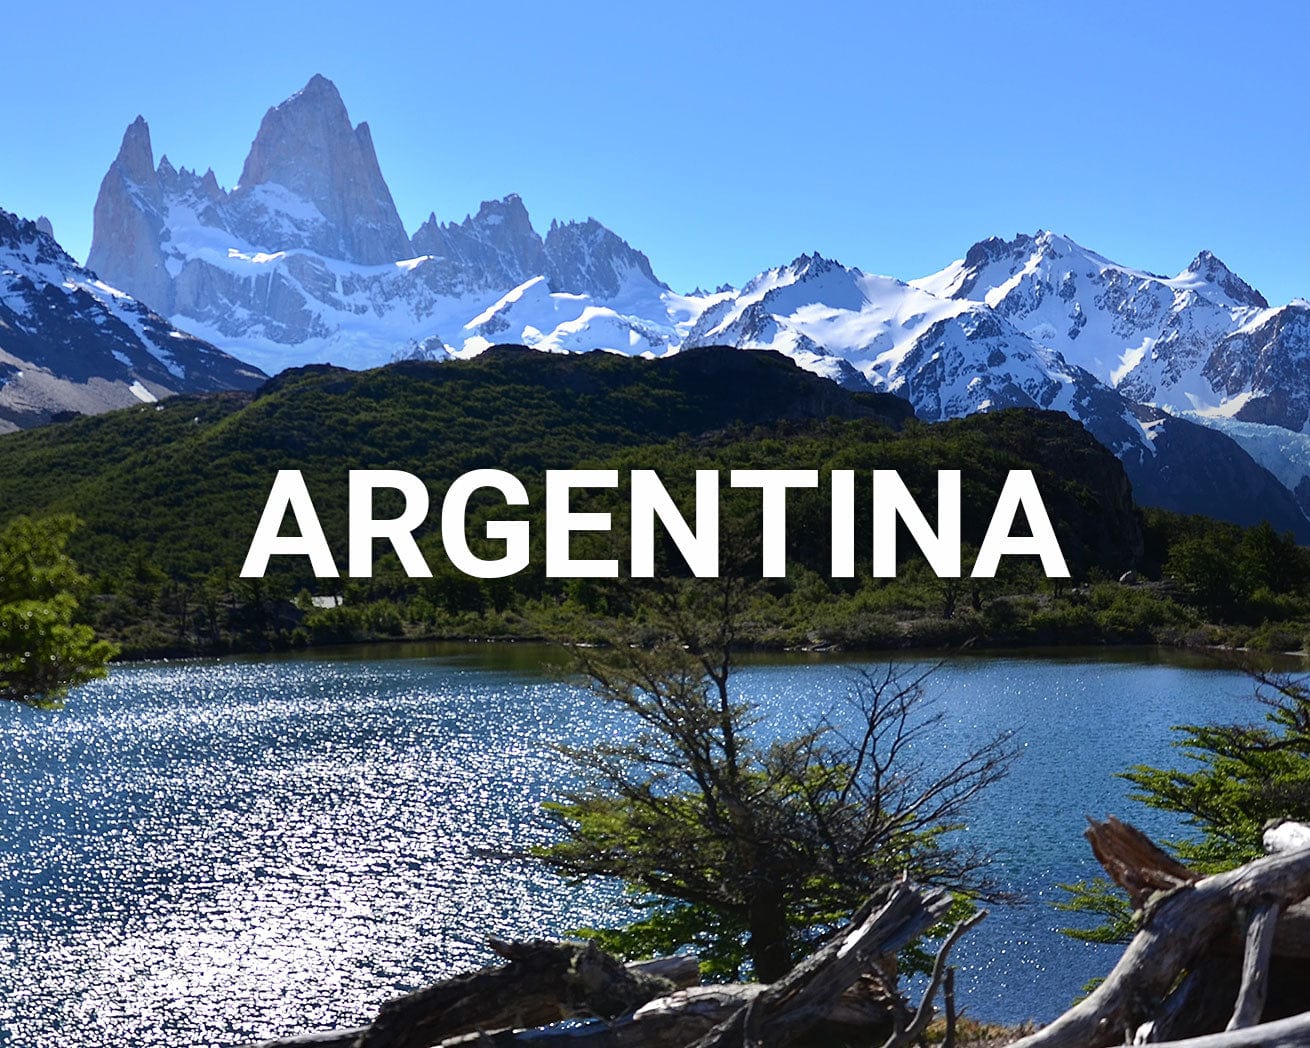 Argentina main image